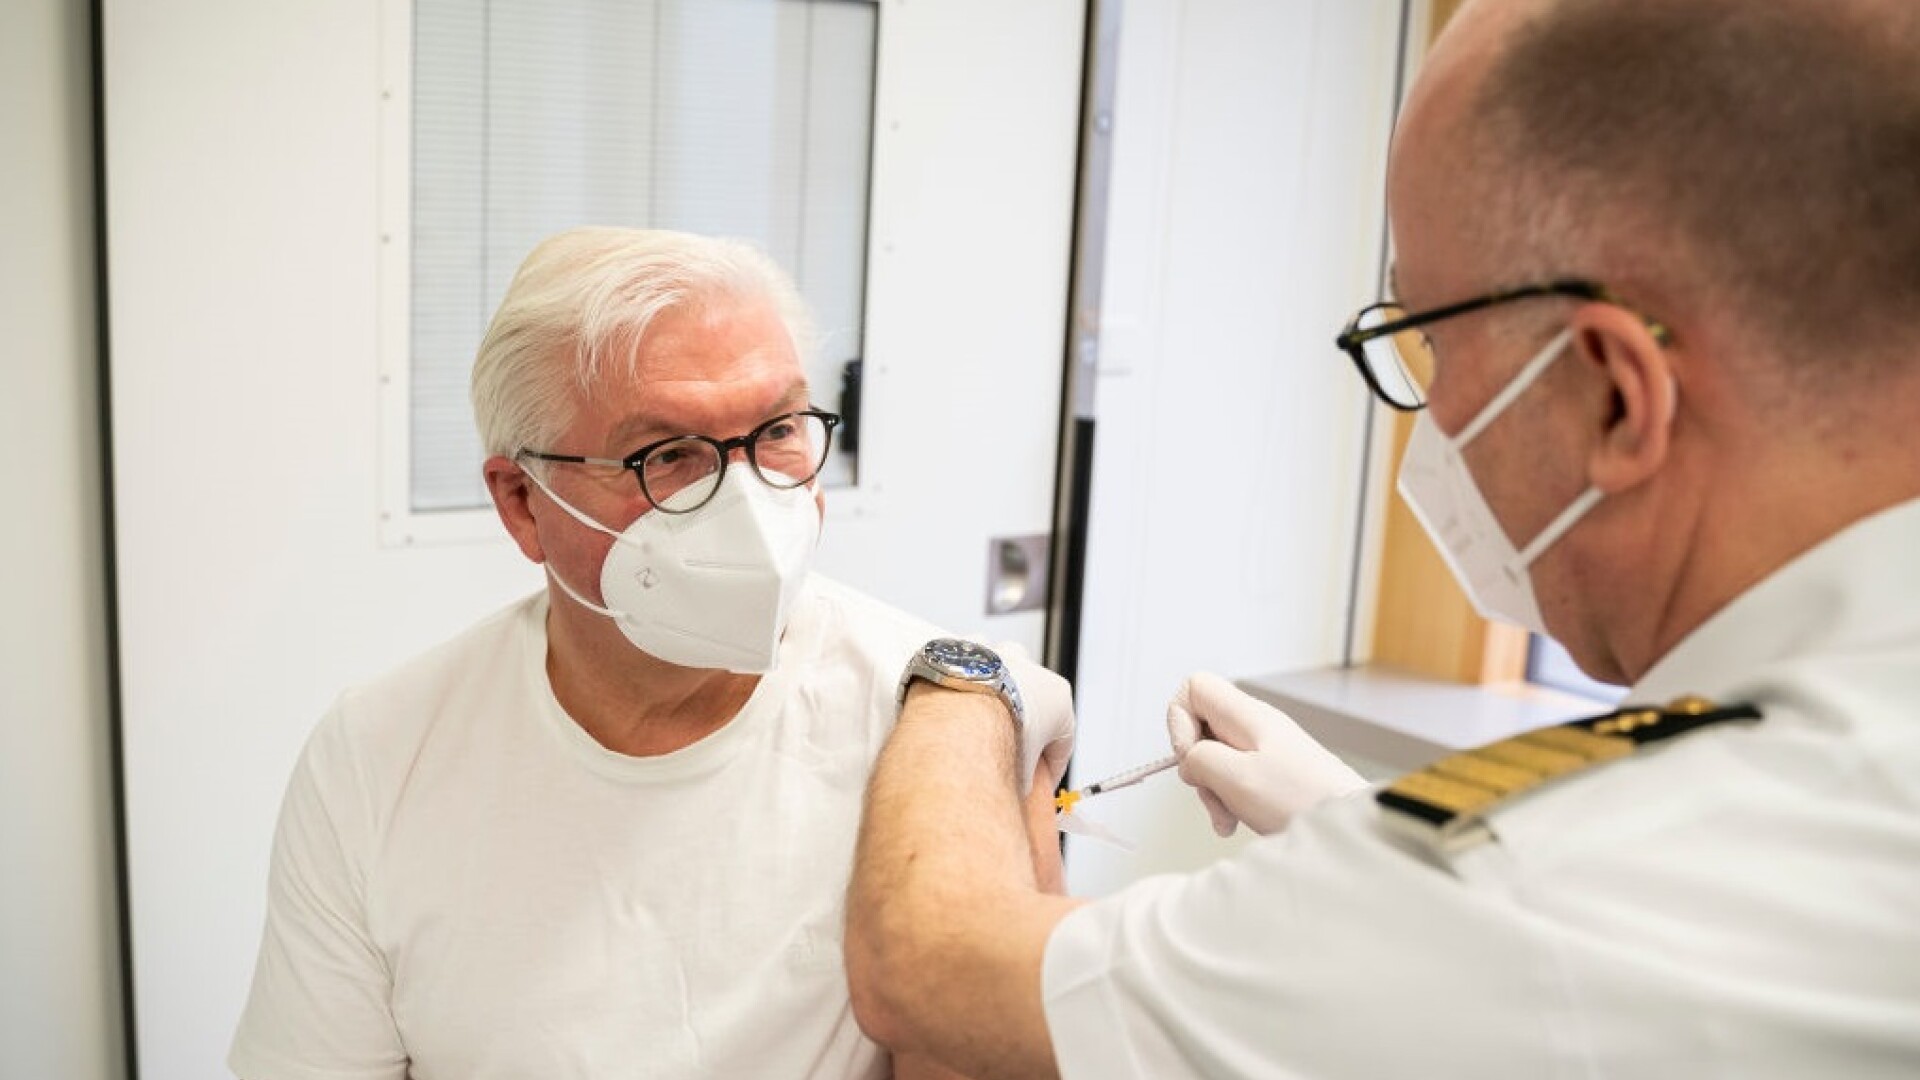 Președintele Germaniei, Frank-Walter Steinmeier, s-a vaccinta anti-Covid cu AstraZeneca